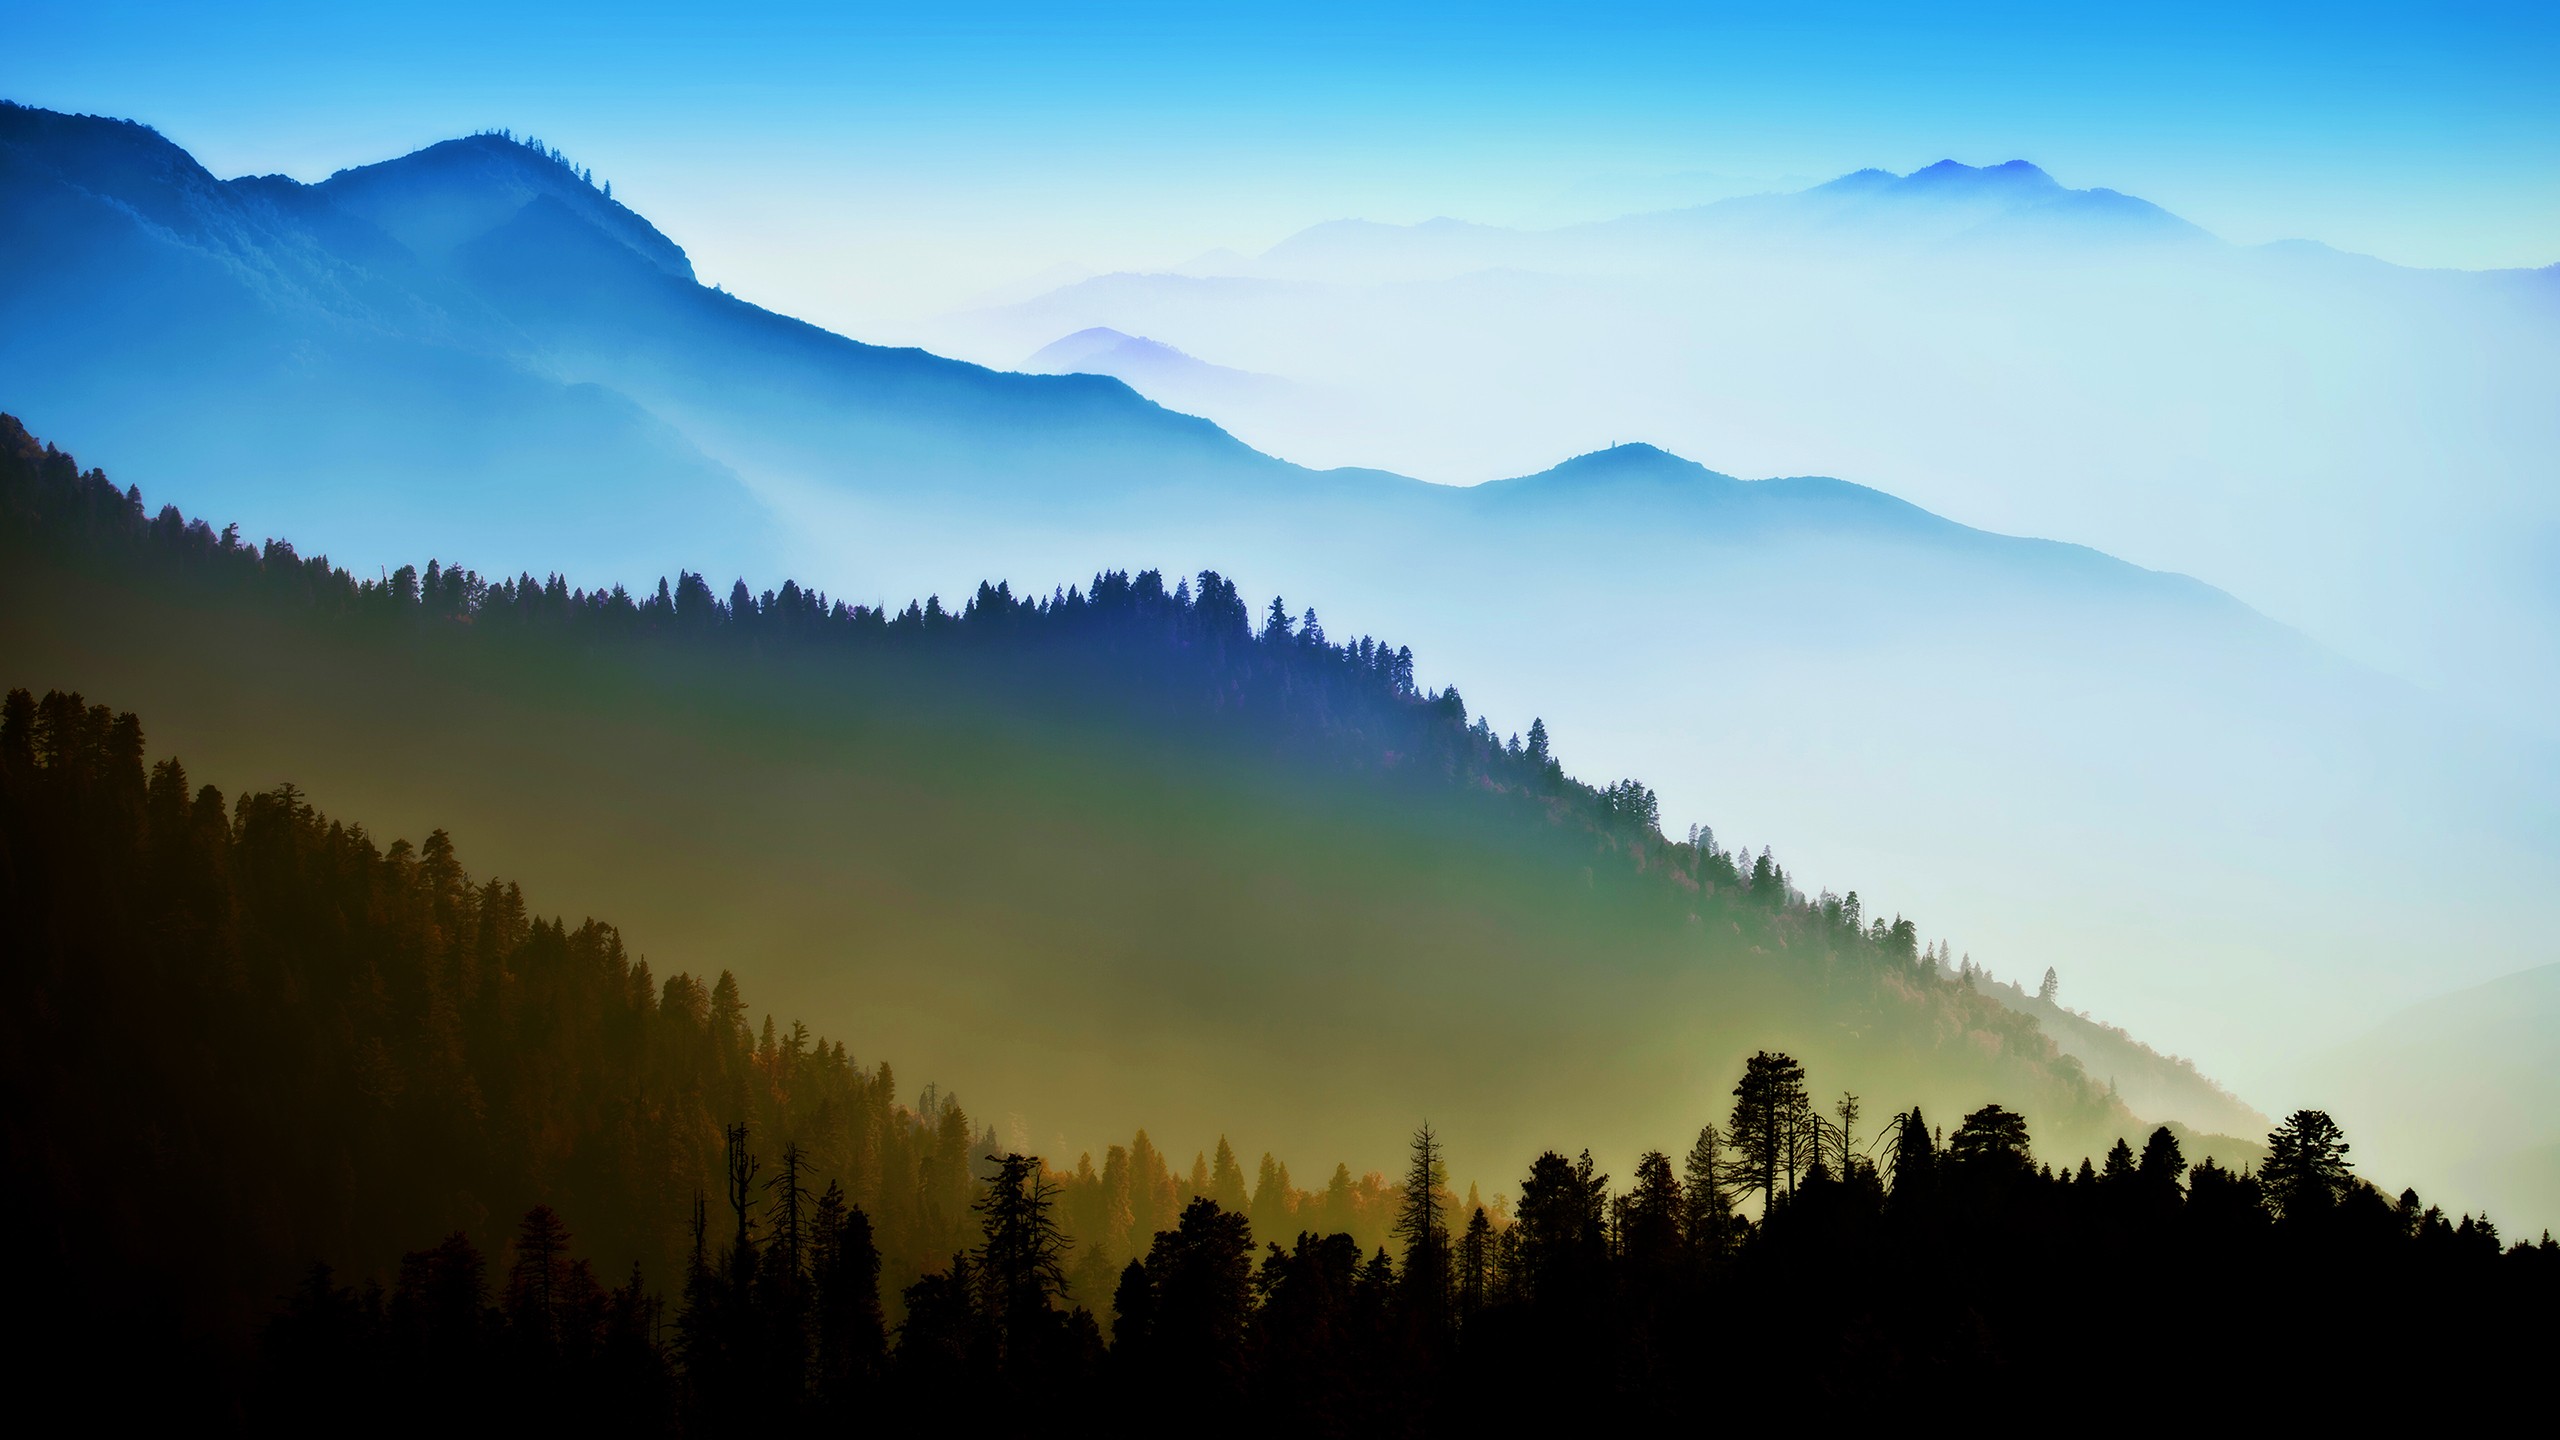 General 2560x1440 mountains sky forest landscape nature mist cyan